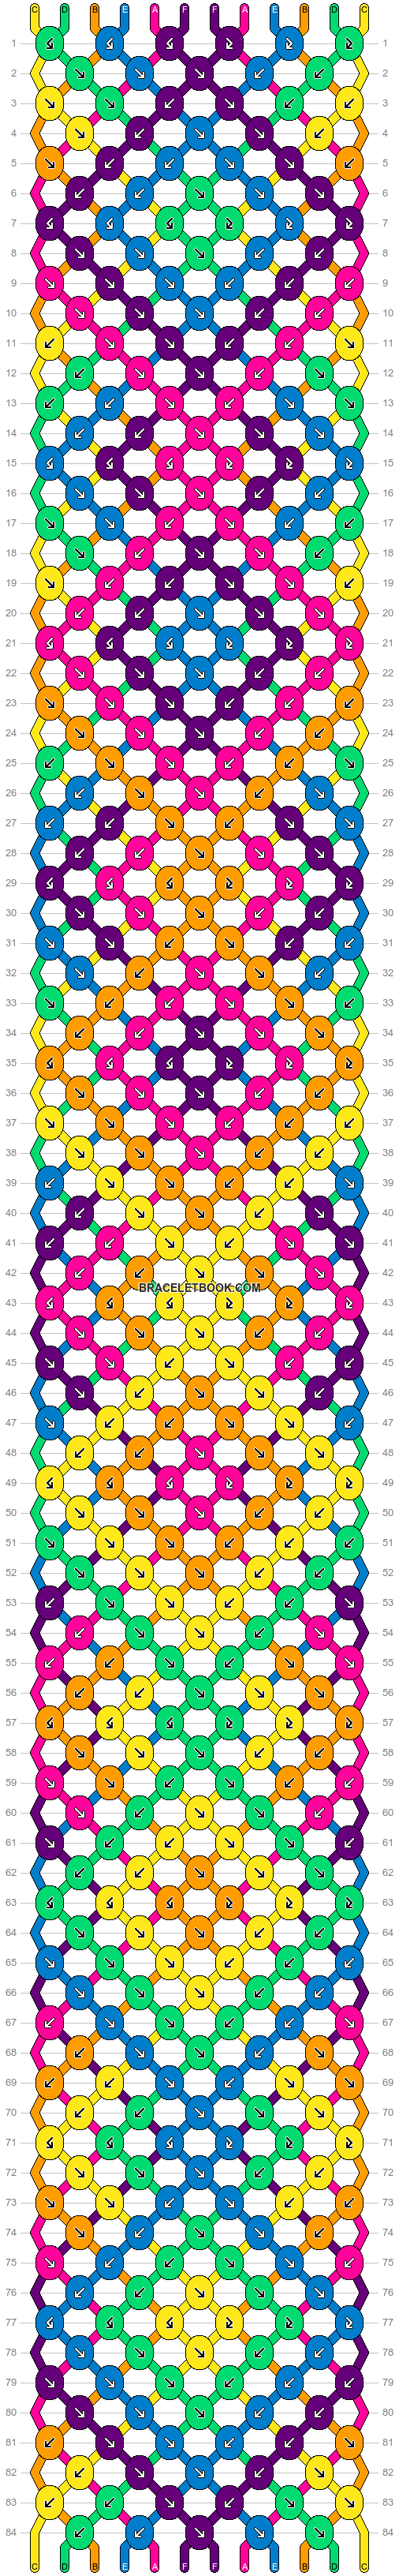 Normal pattern #43494 | BraceletBook